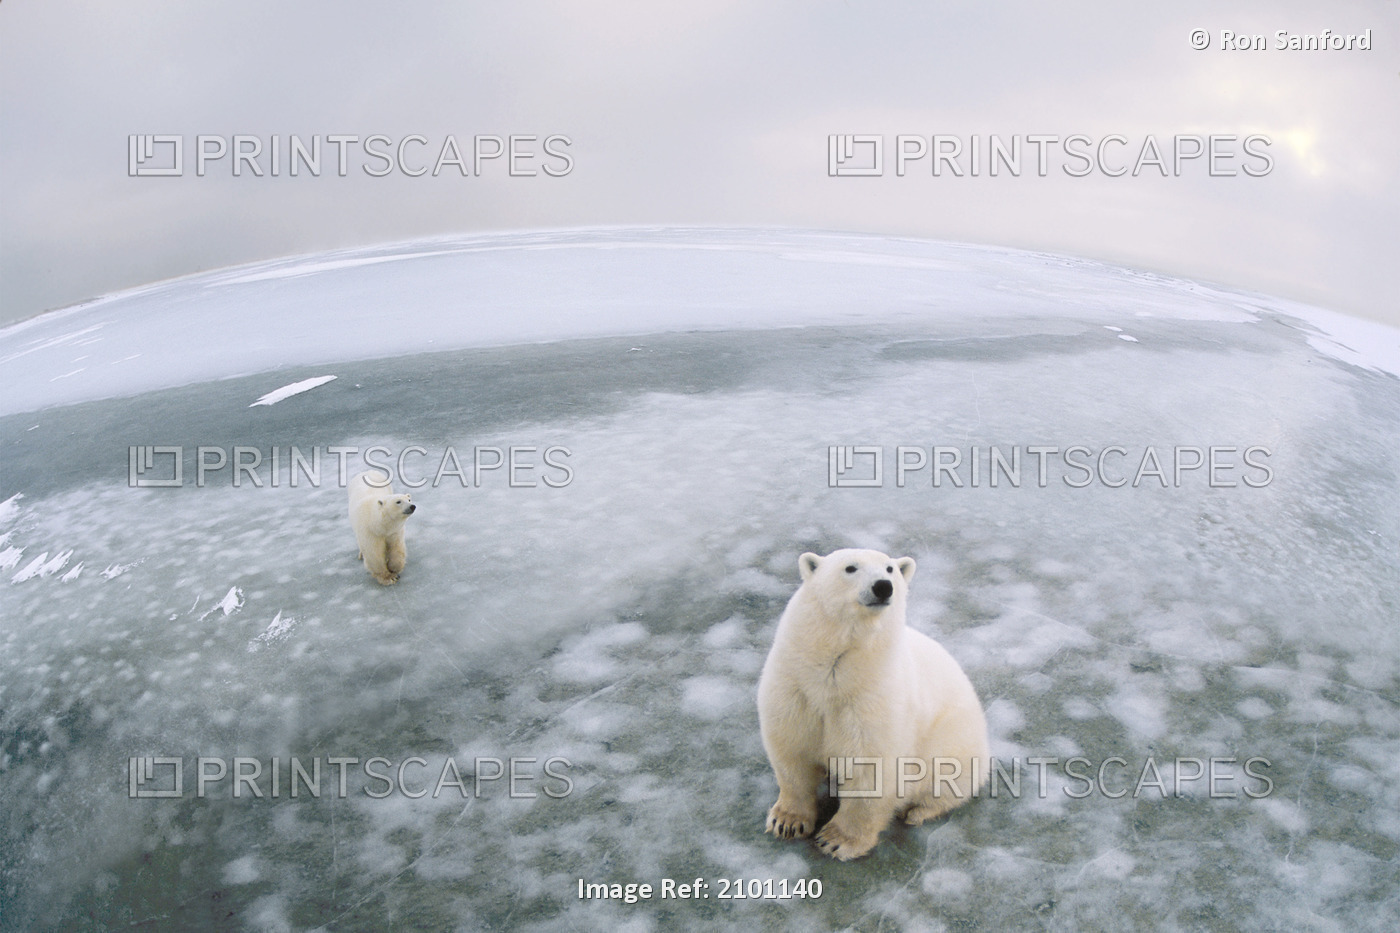 Fish-Eye Lens View Of Polar Bears On Ice At Cape Churchill, Manitoba, Canada